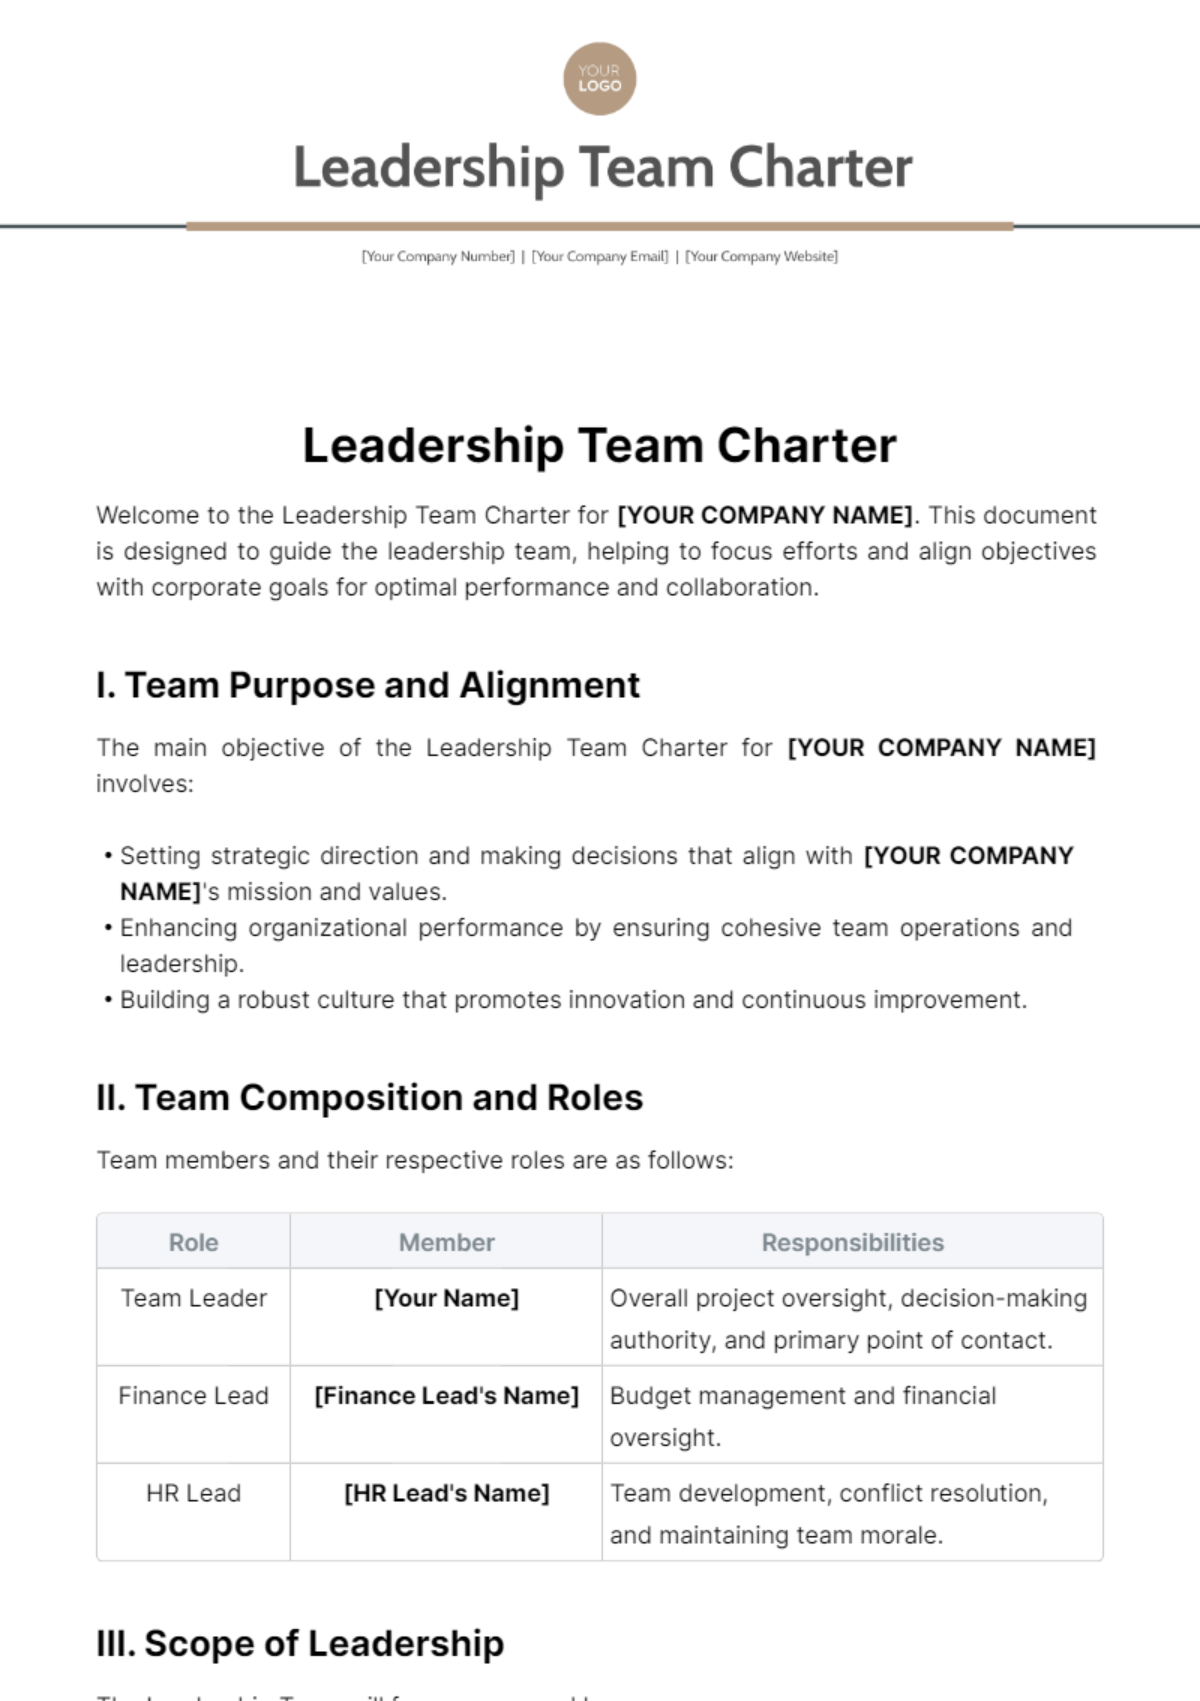 Leadership Team Charter Template